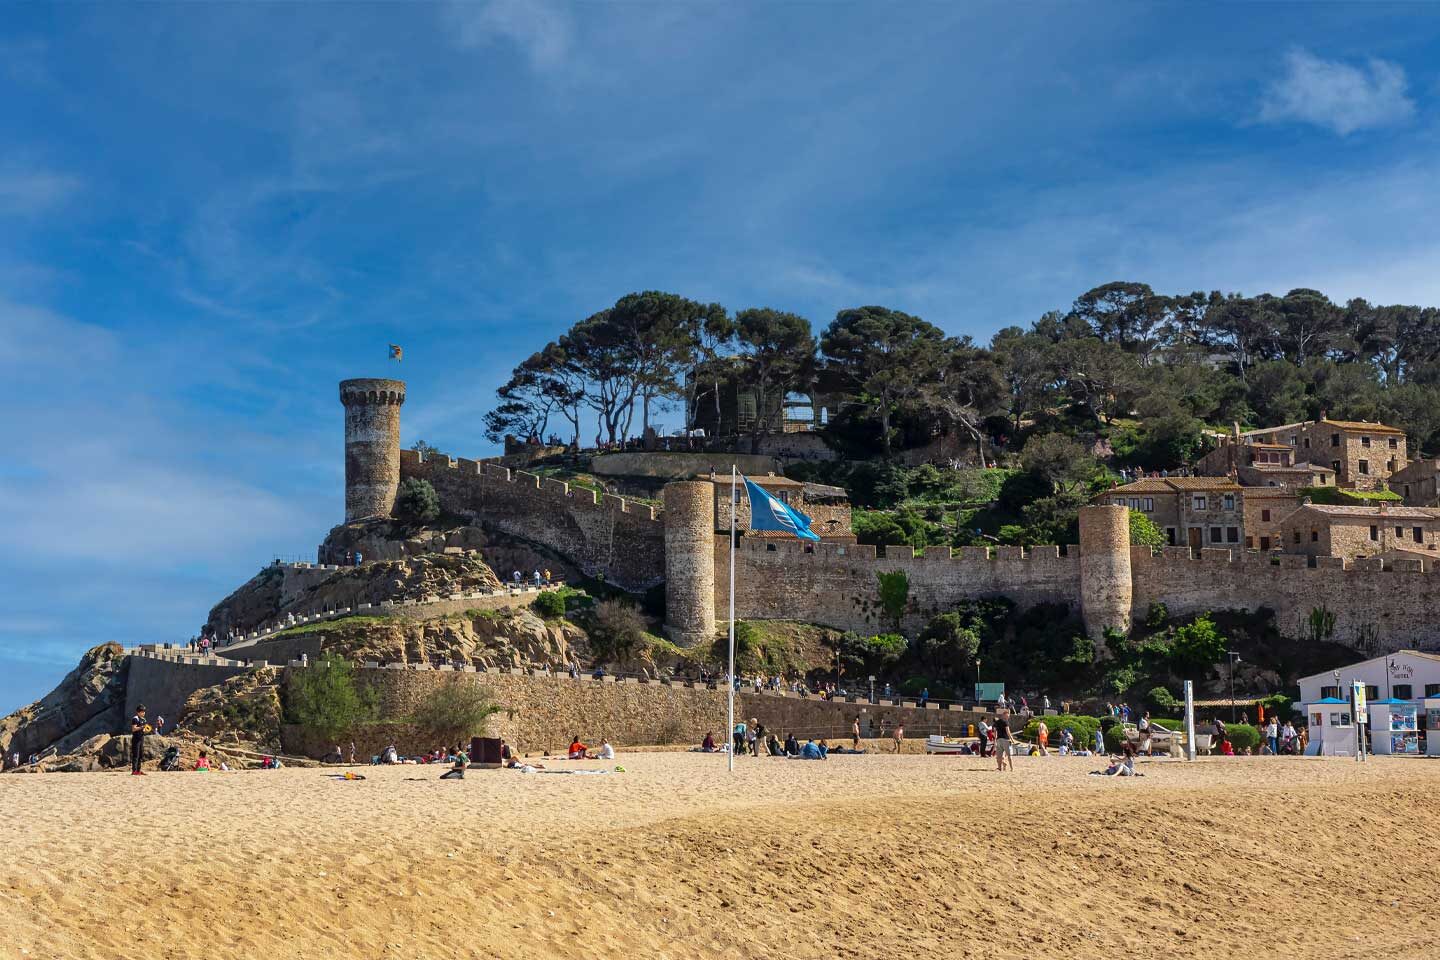 Sandy beach in Tossa de Mar, Spain